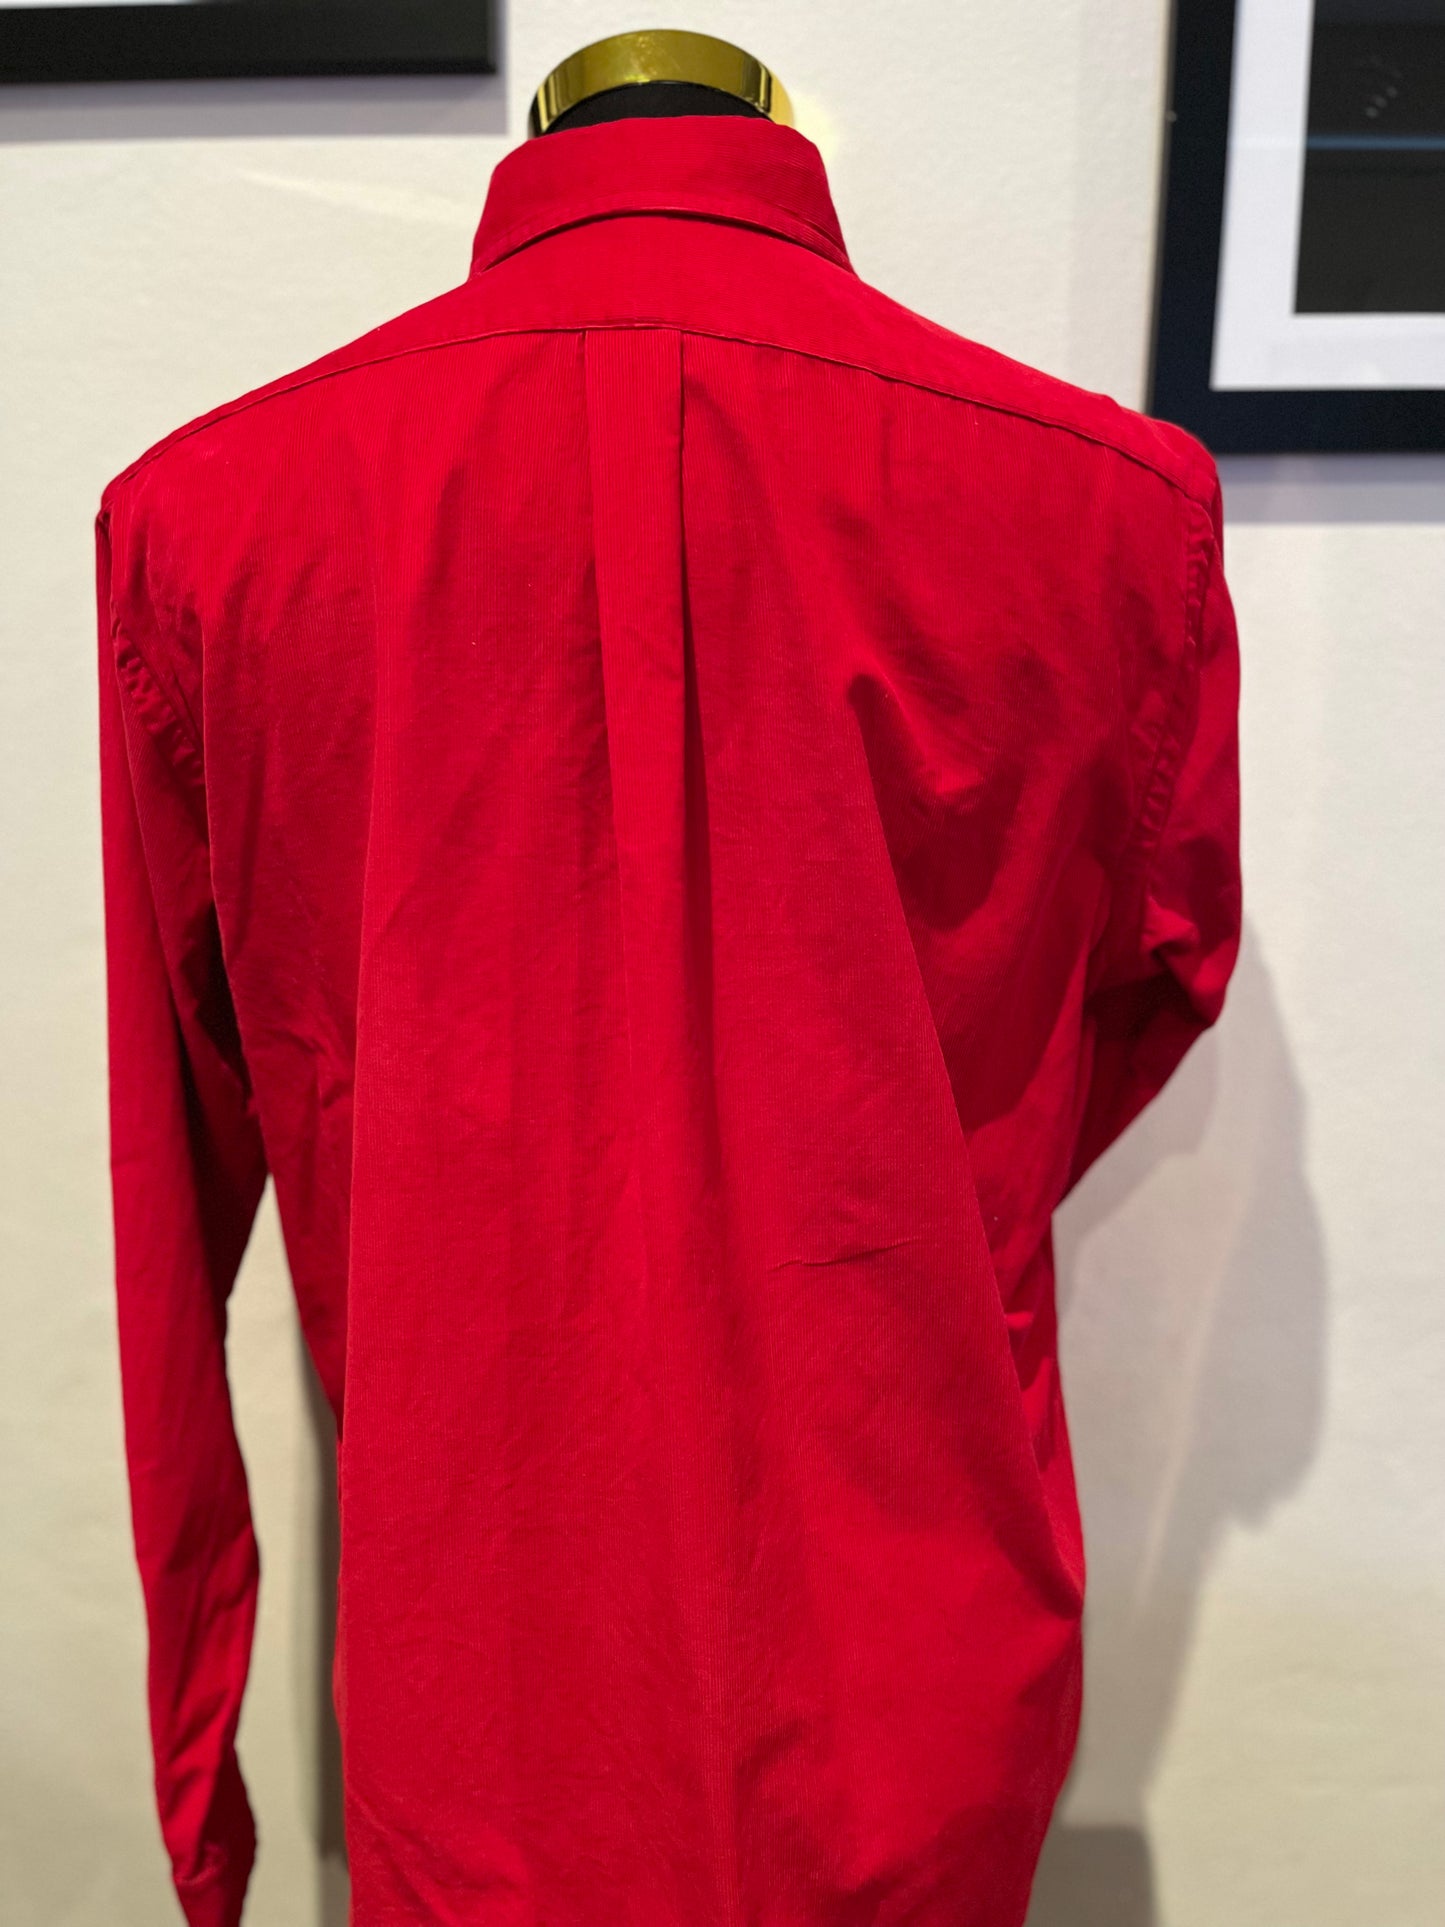 Ralph Lauren 100% Cotton Corduroy Red Shirt Size Large Classic Fit Button Down Collar